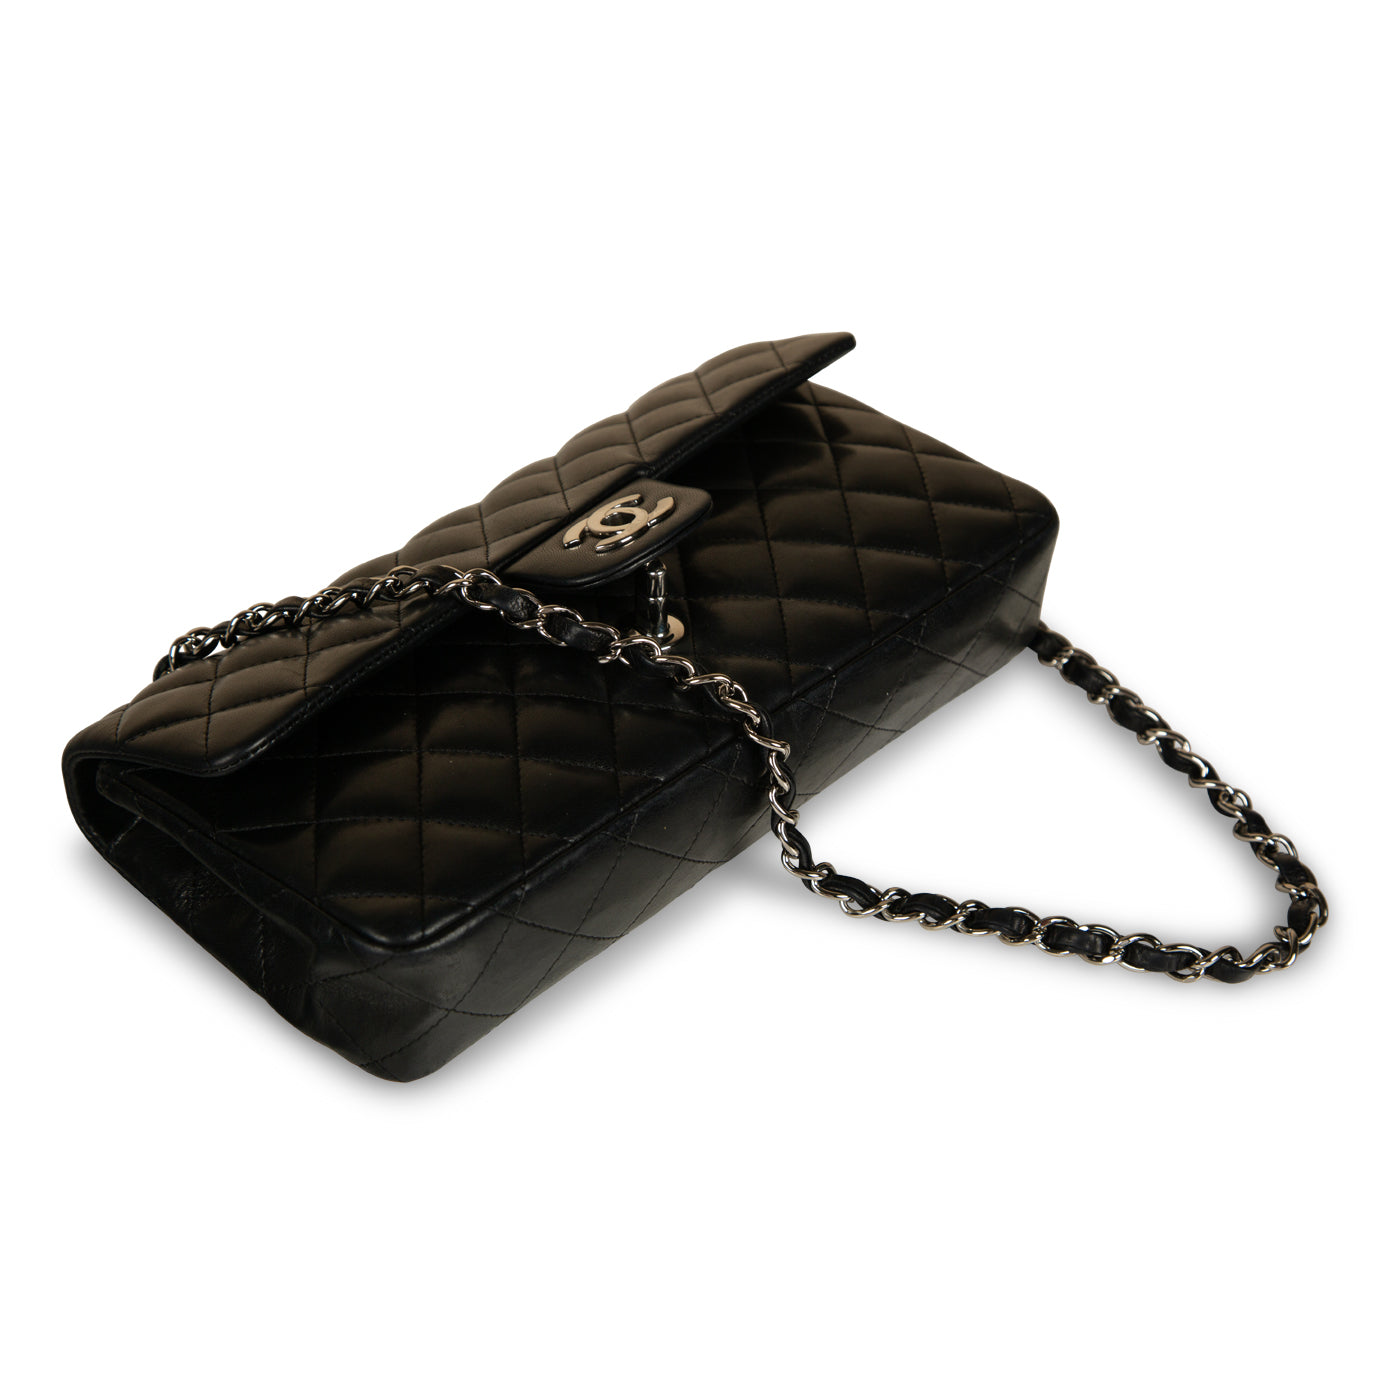 Chanel - East West Flap Bag - Black- Lambskin Leather